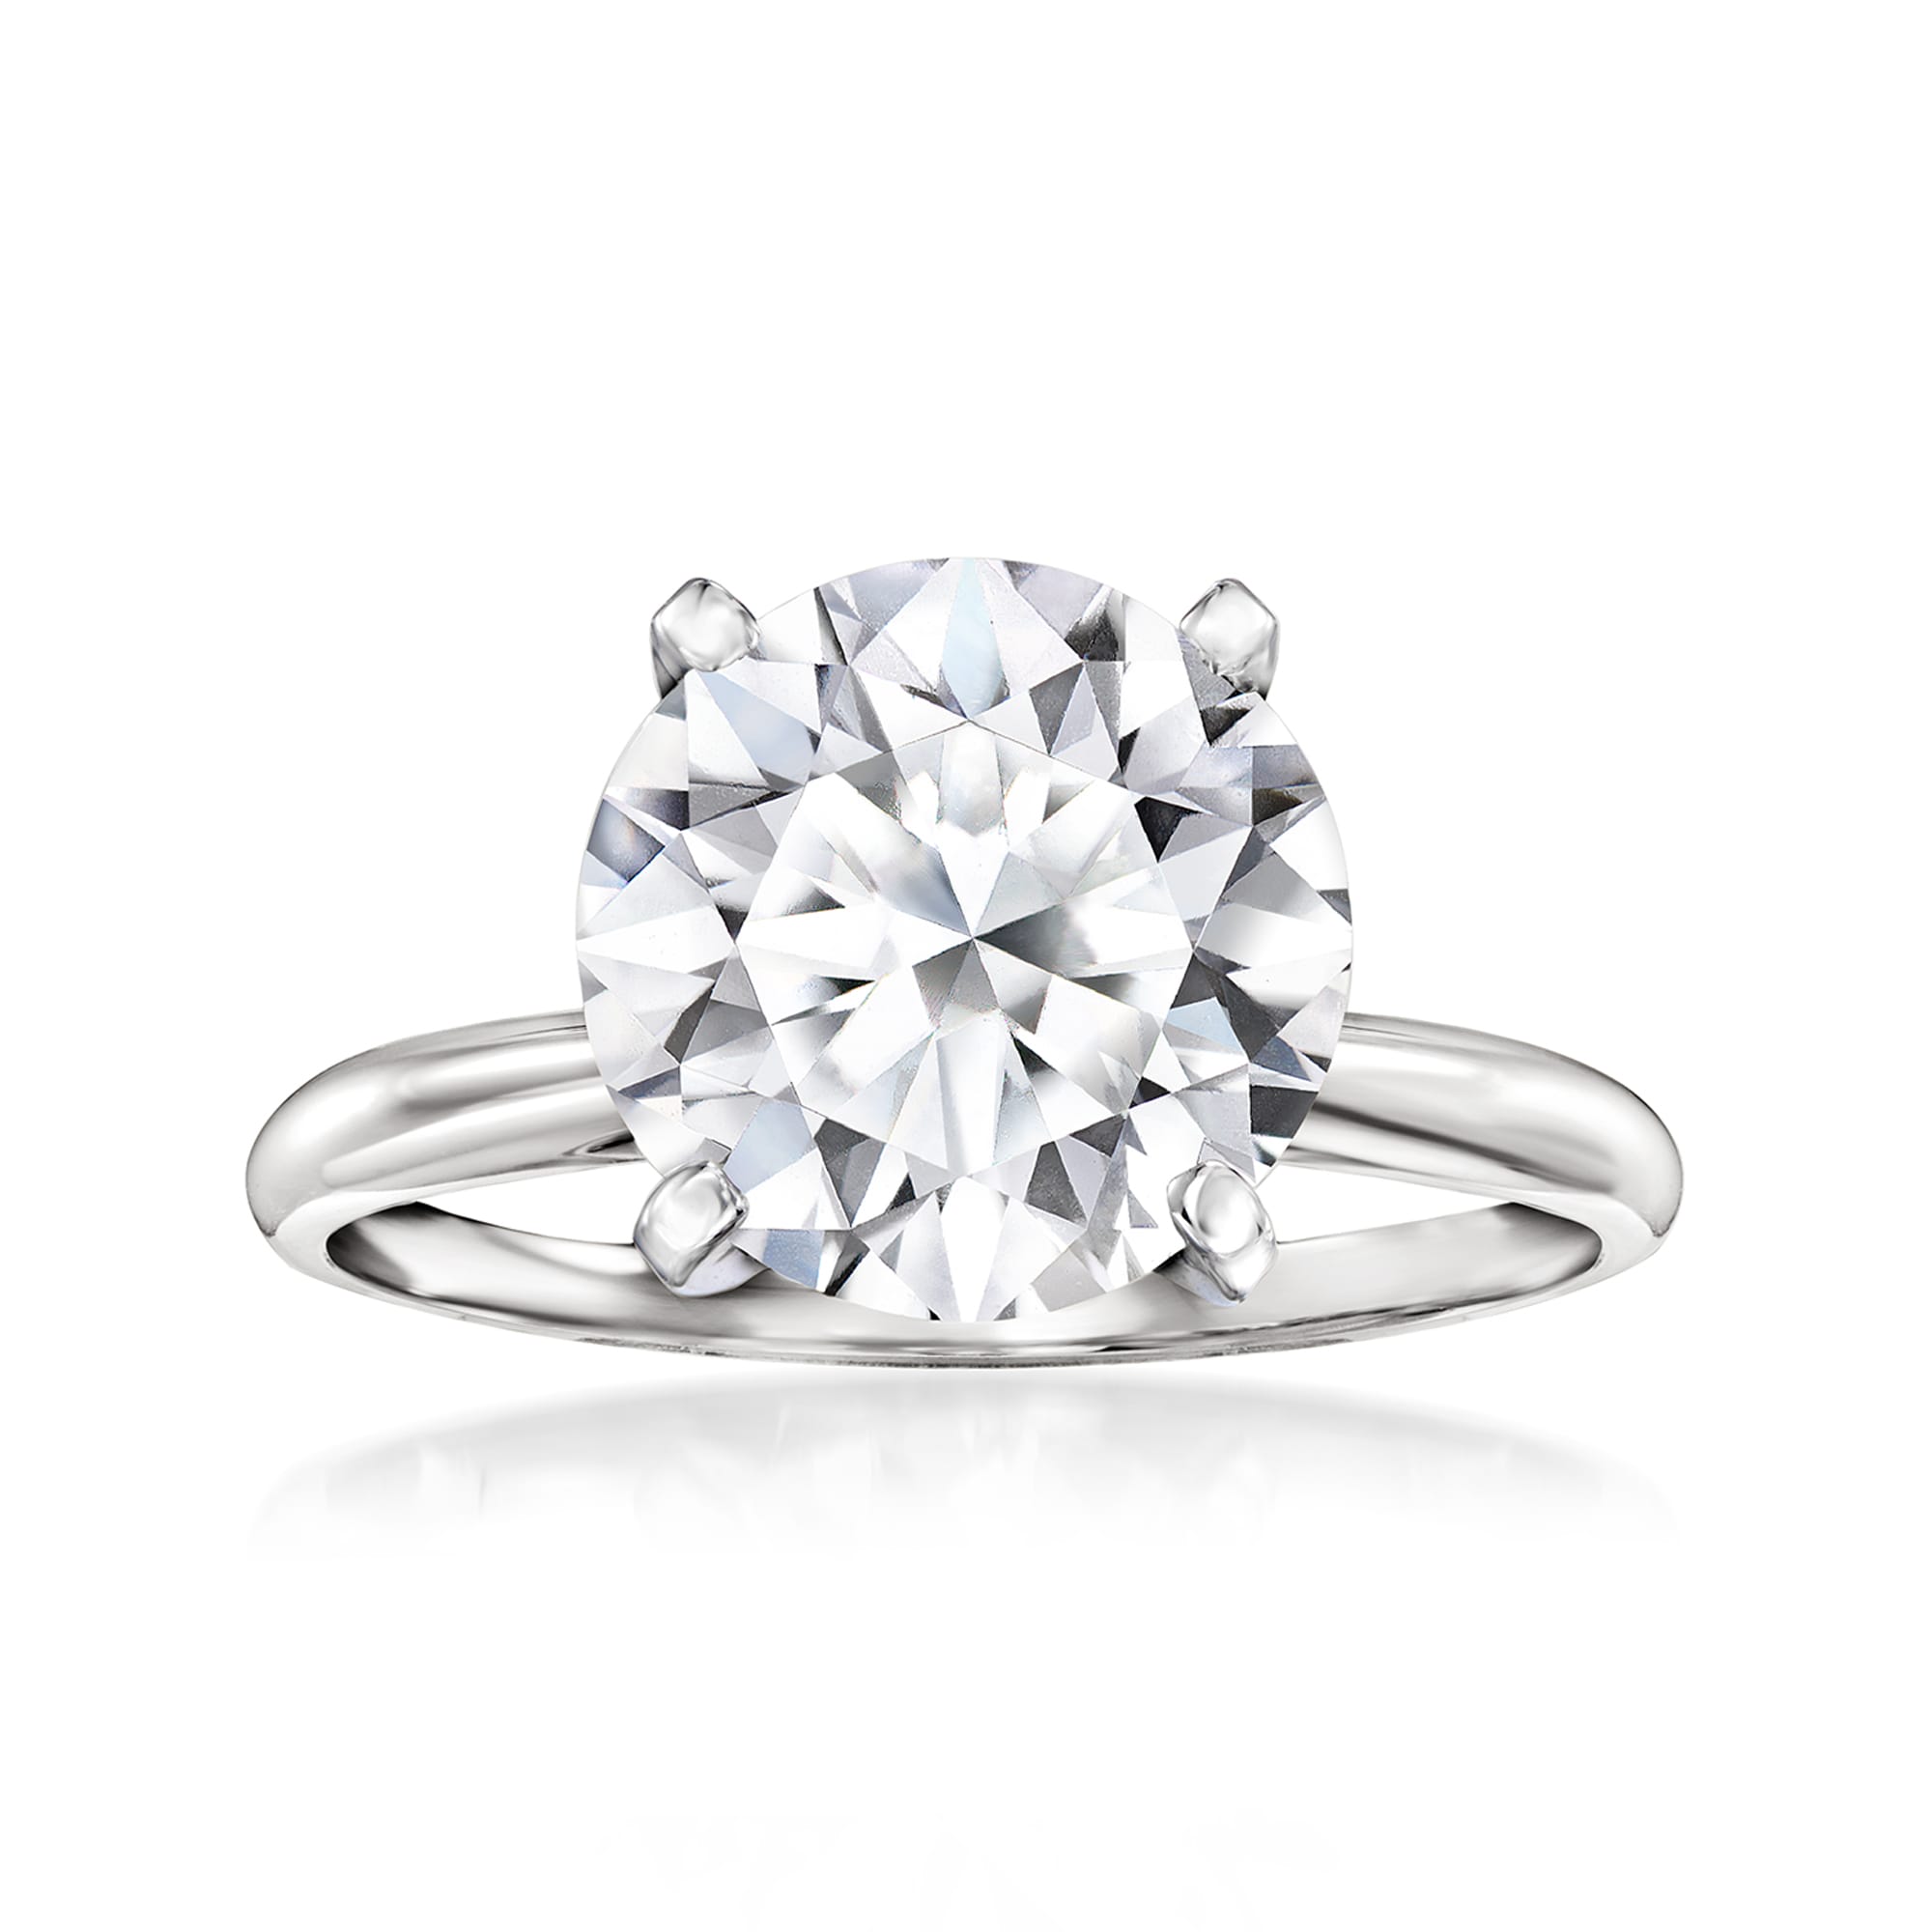 5.00 Carat Lab-Grown Diamond Solitaire Ring in Platinum | Ross-Simons